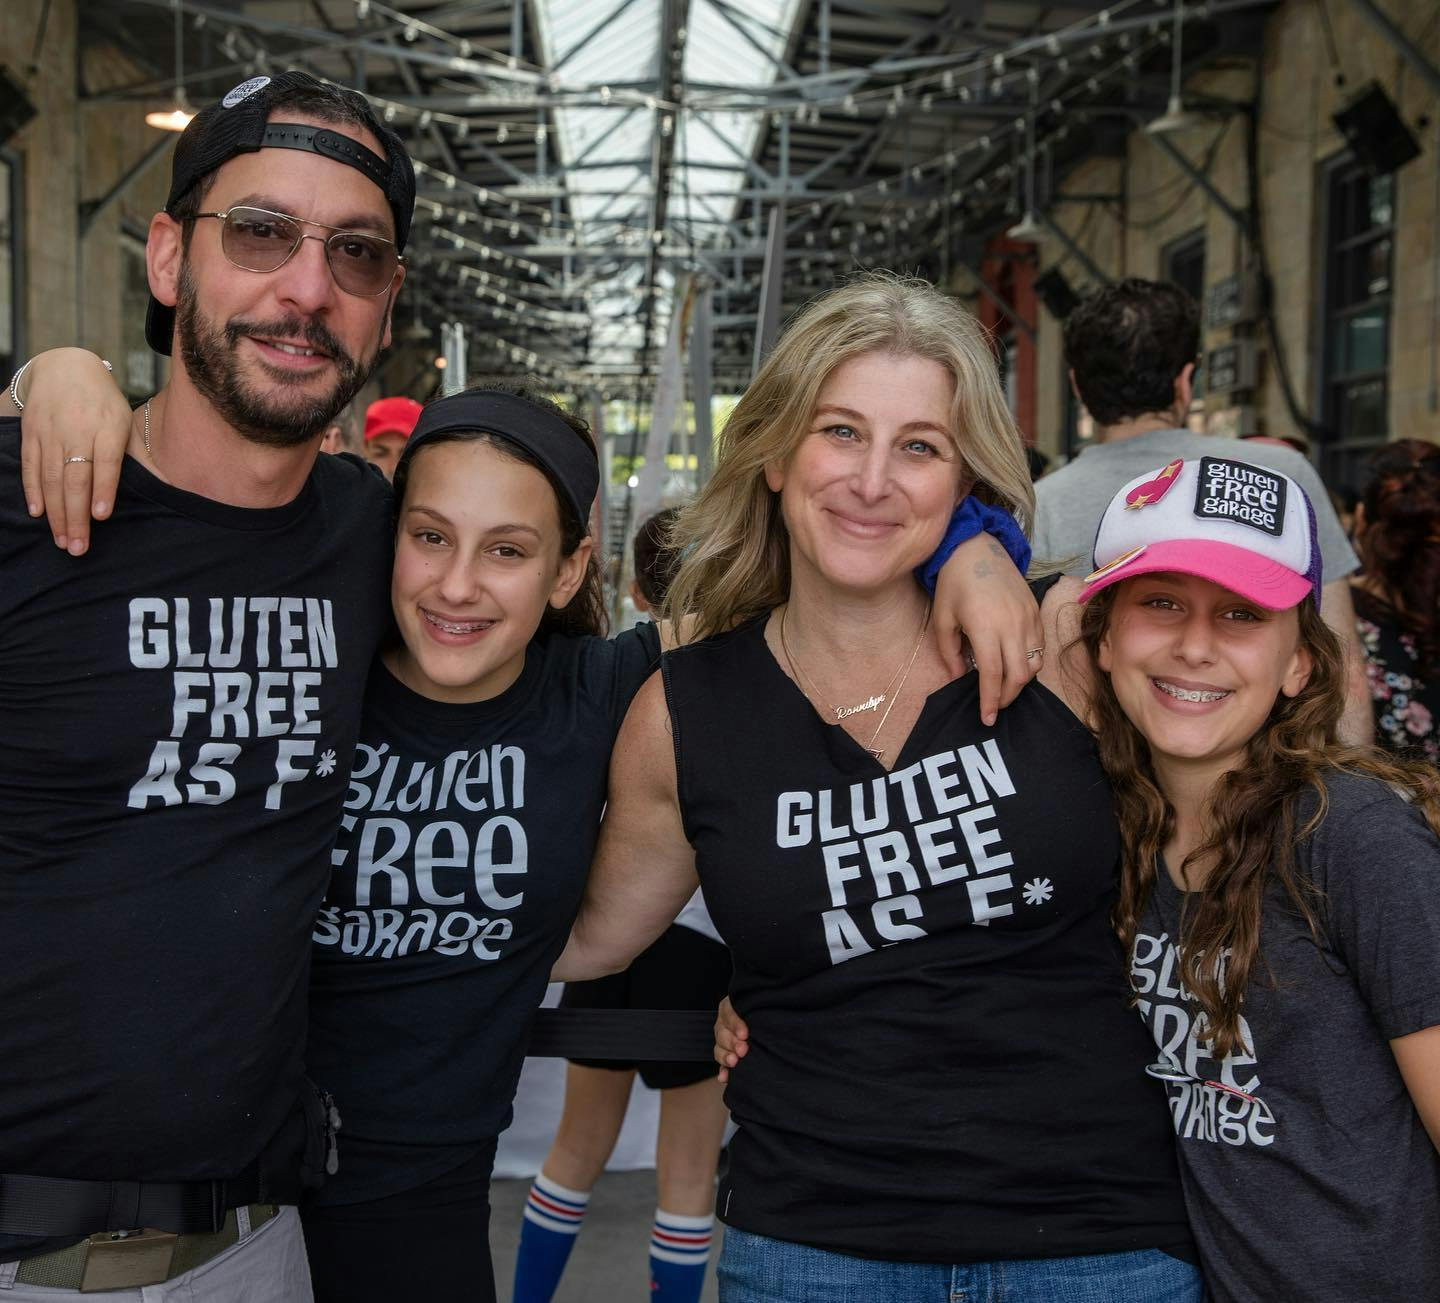 Toronto’s OG Gluten-Free Festival is Returning this Month to Wychwood Barns